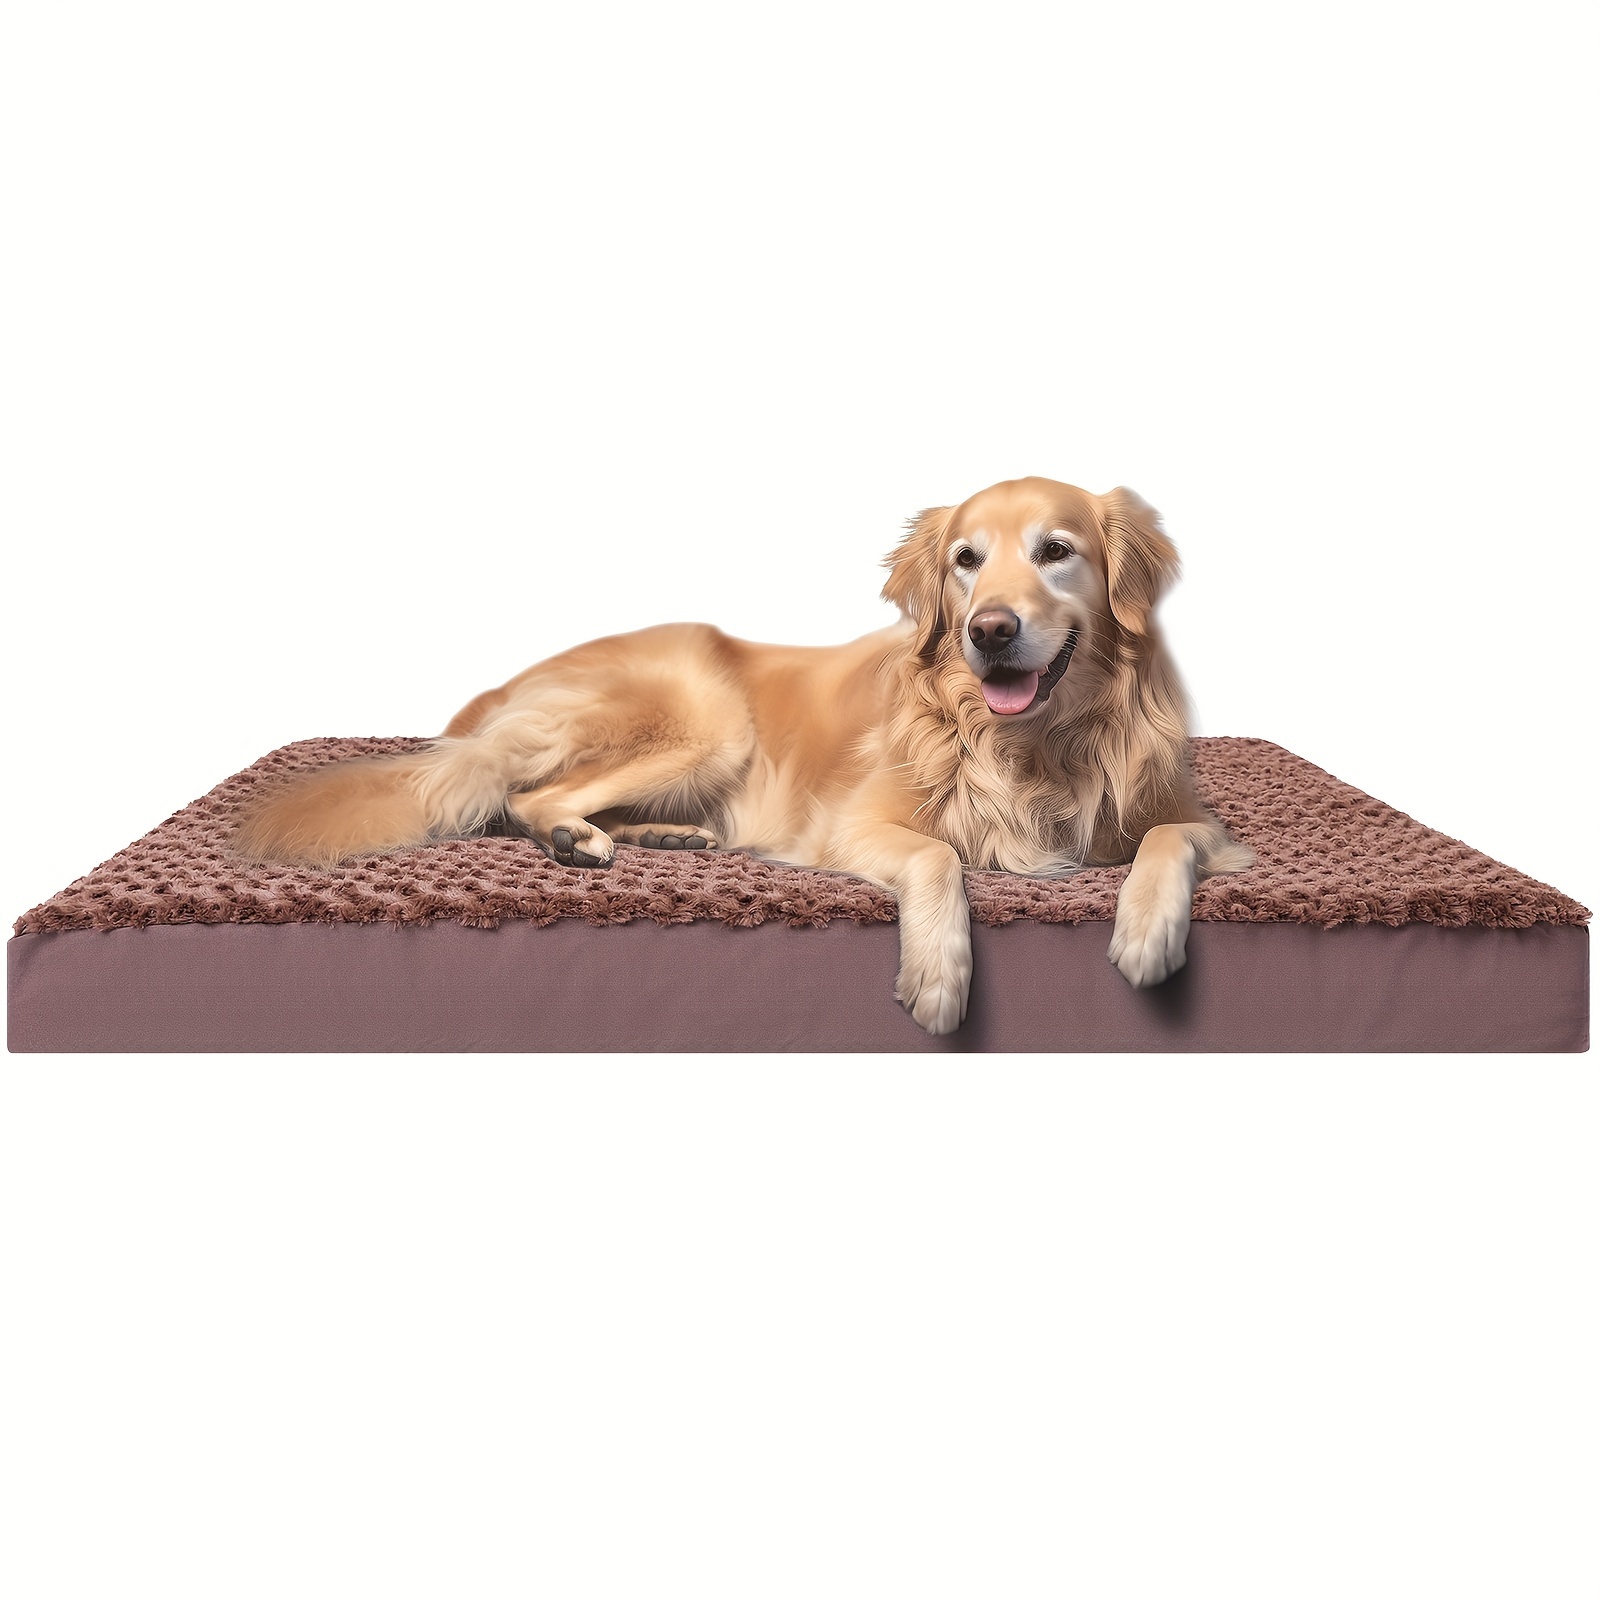 Cuccia per cani di lusso per cani di grandi dimensioni tappetino